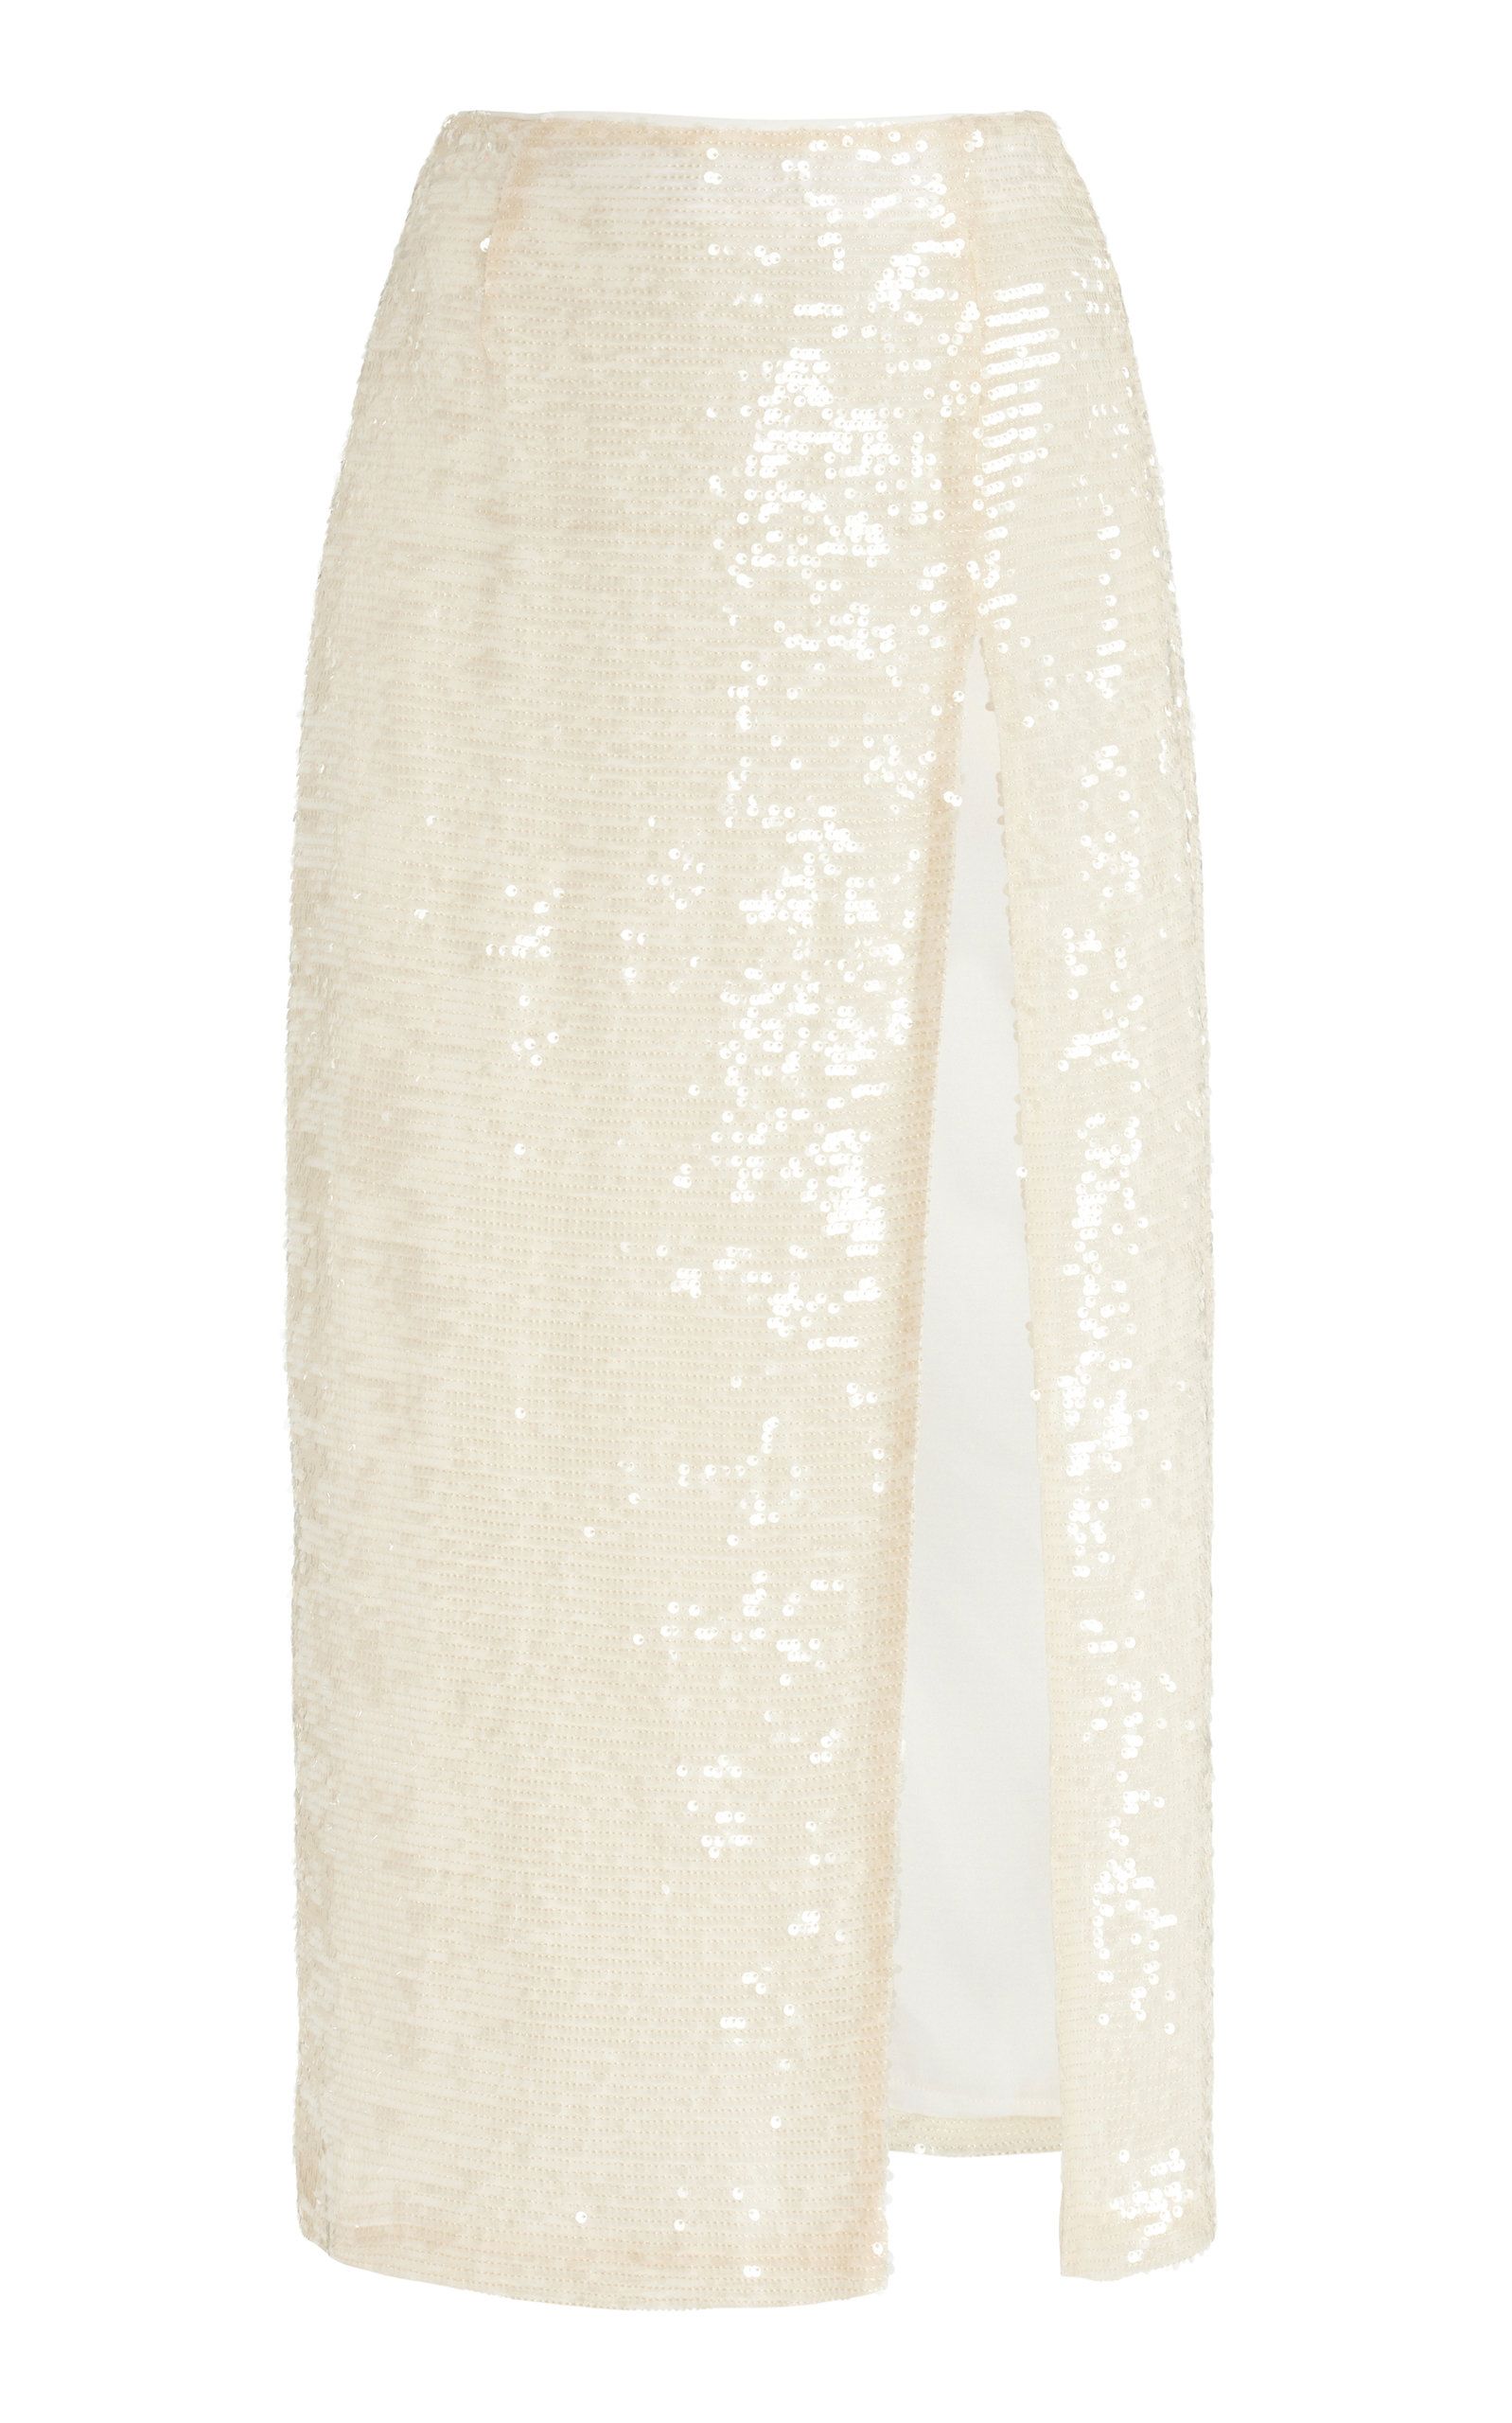 LAPOINTE - Women's Sequin High-Waisted Midi Skirt - Ivory - US 8 - Moda Operandi | Moda Operandi (Global)